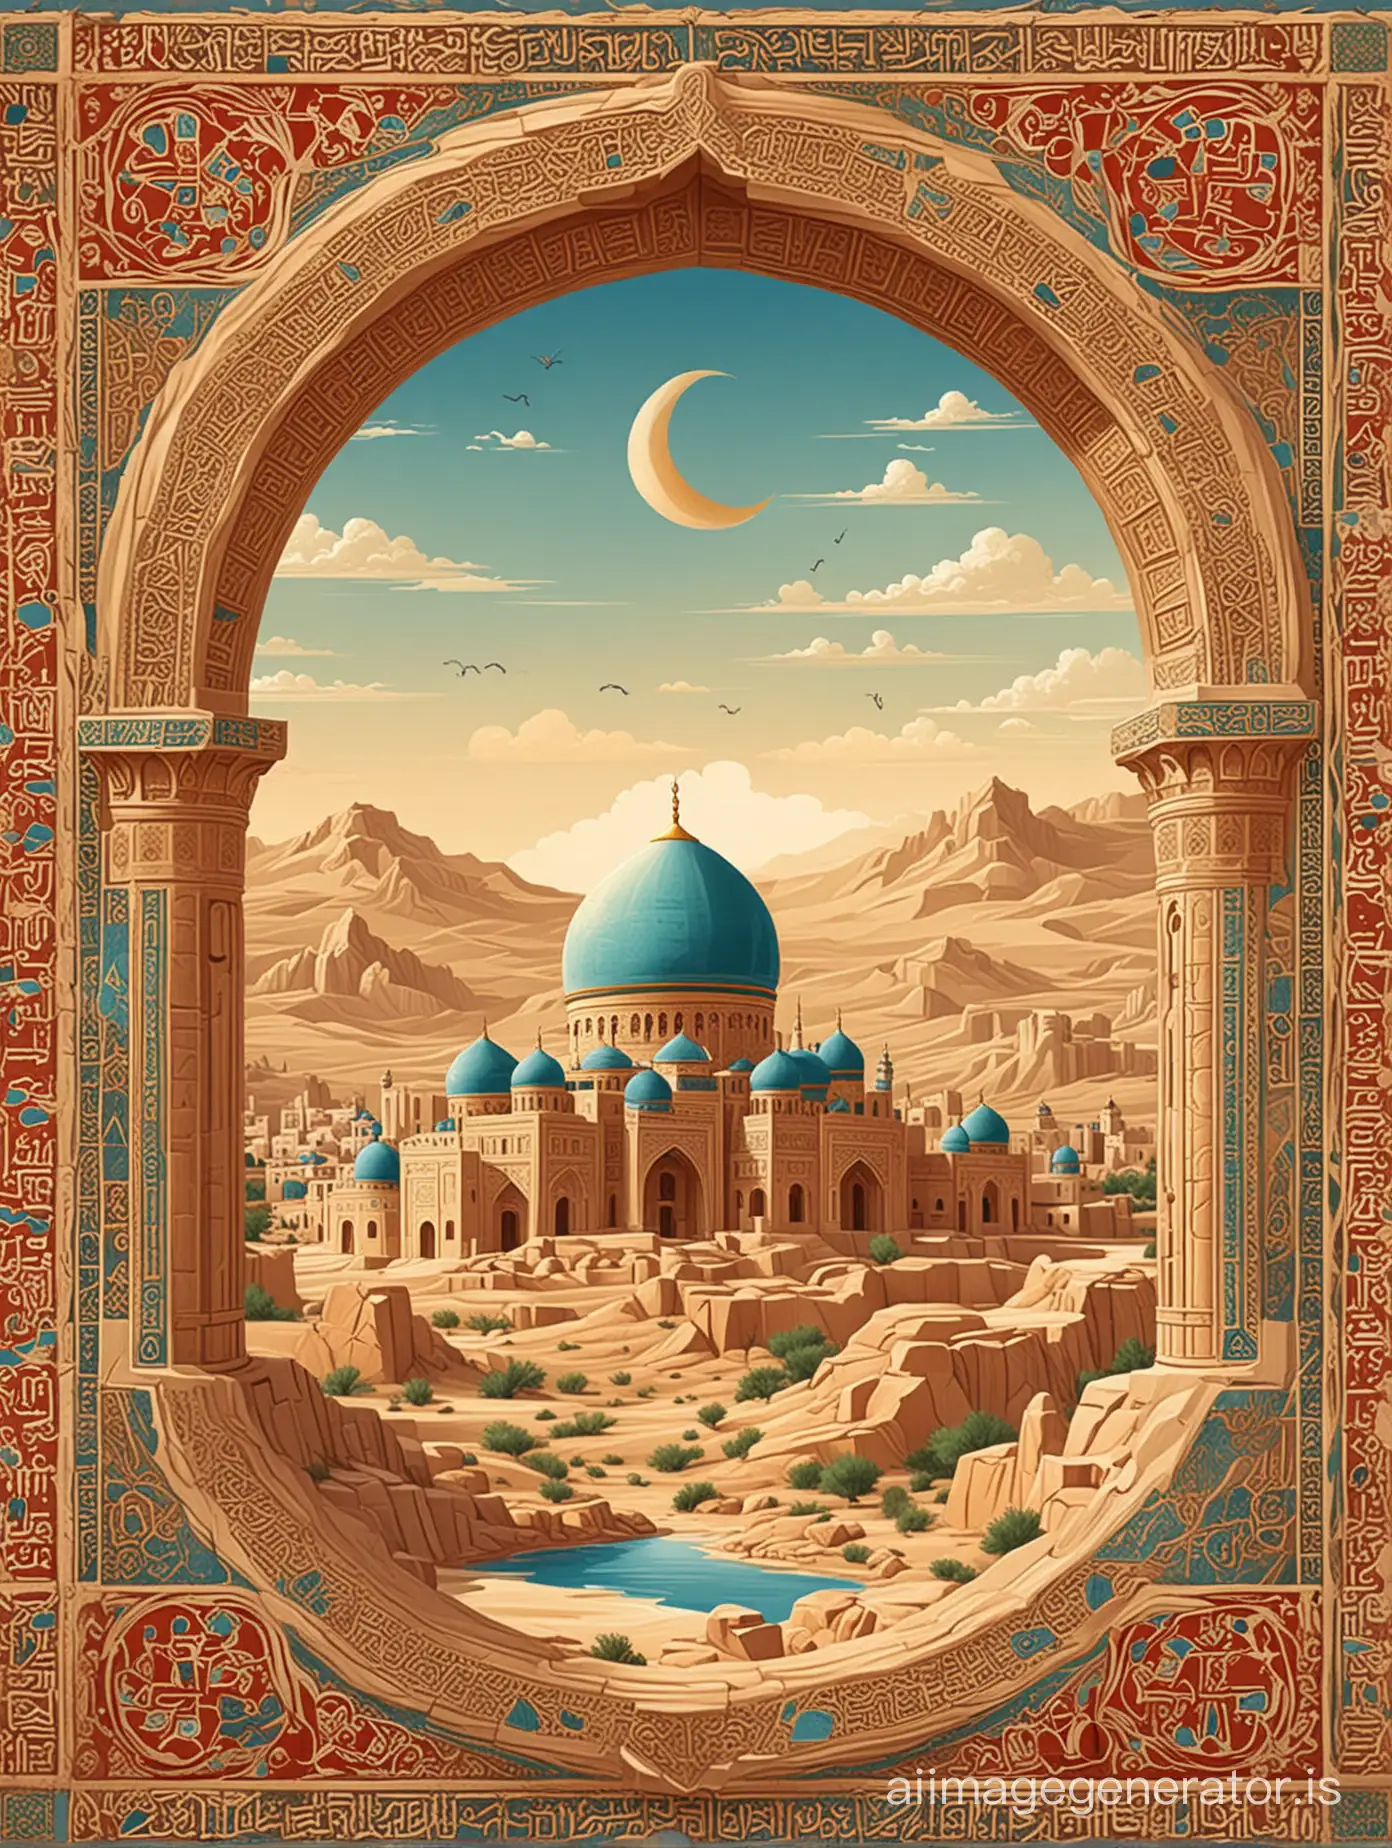 Khorezm-Historical-Monuments-Ancient-Oriental-Style-Book-Cover-Illustration